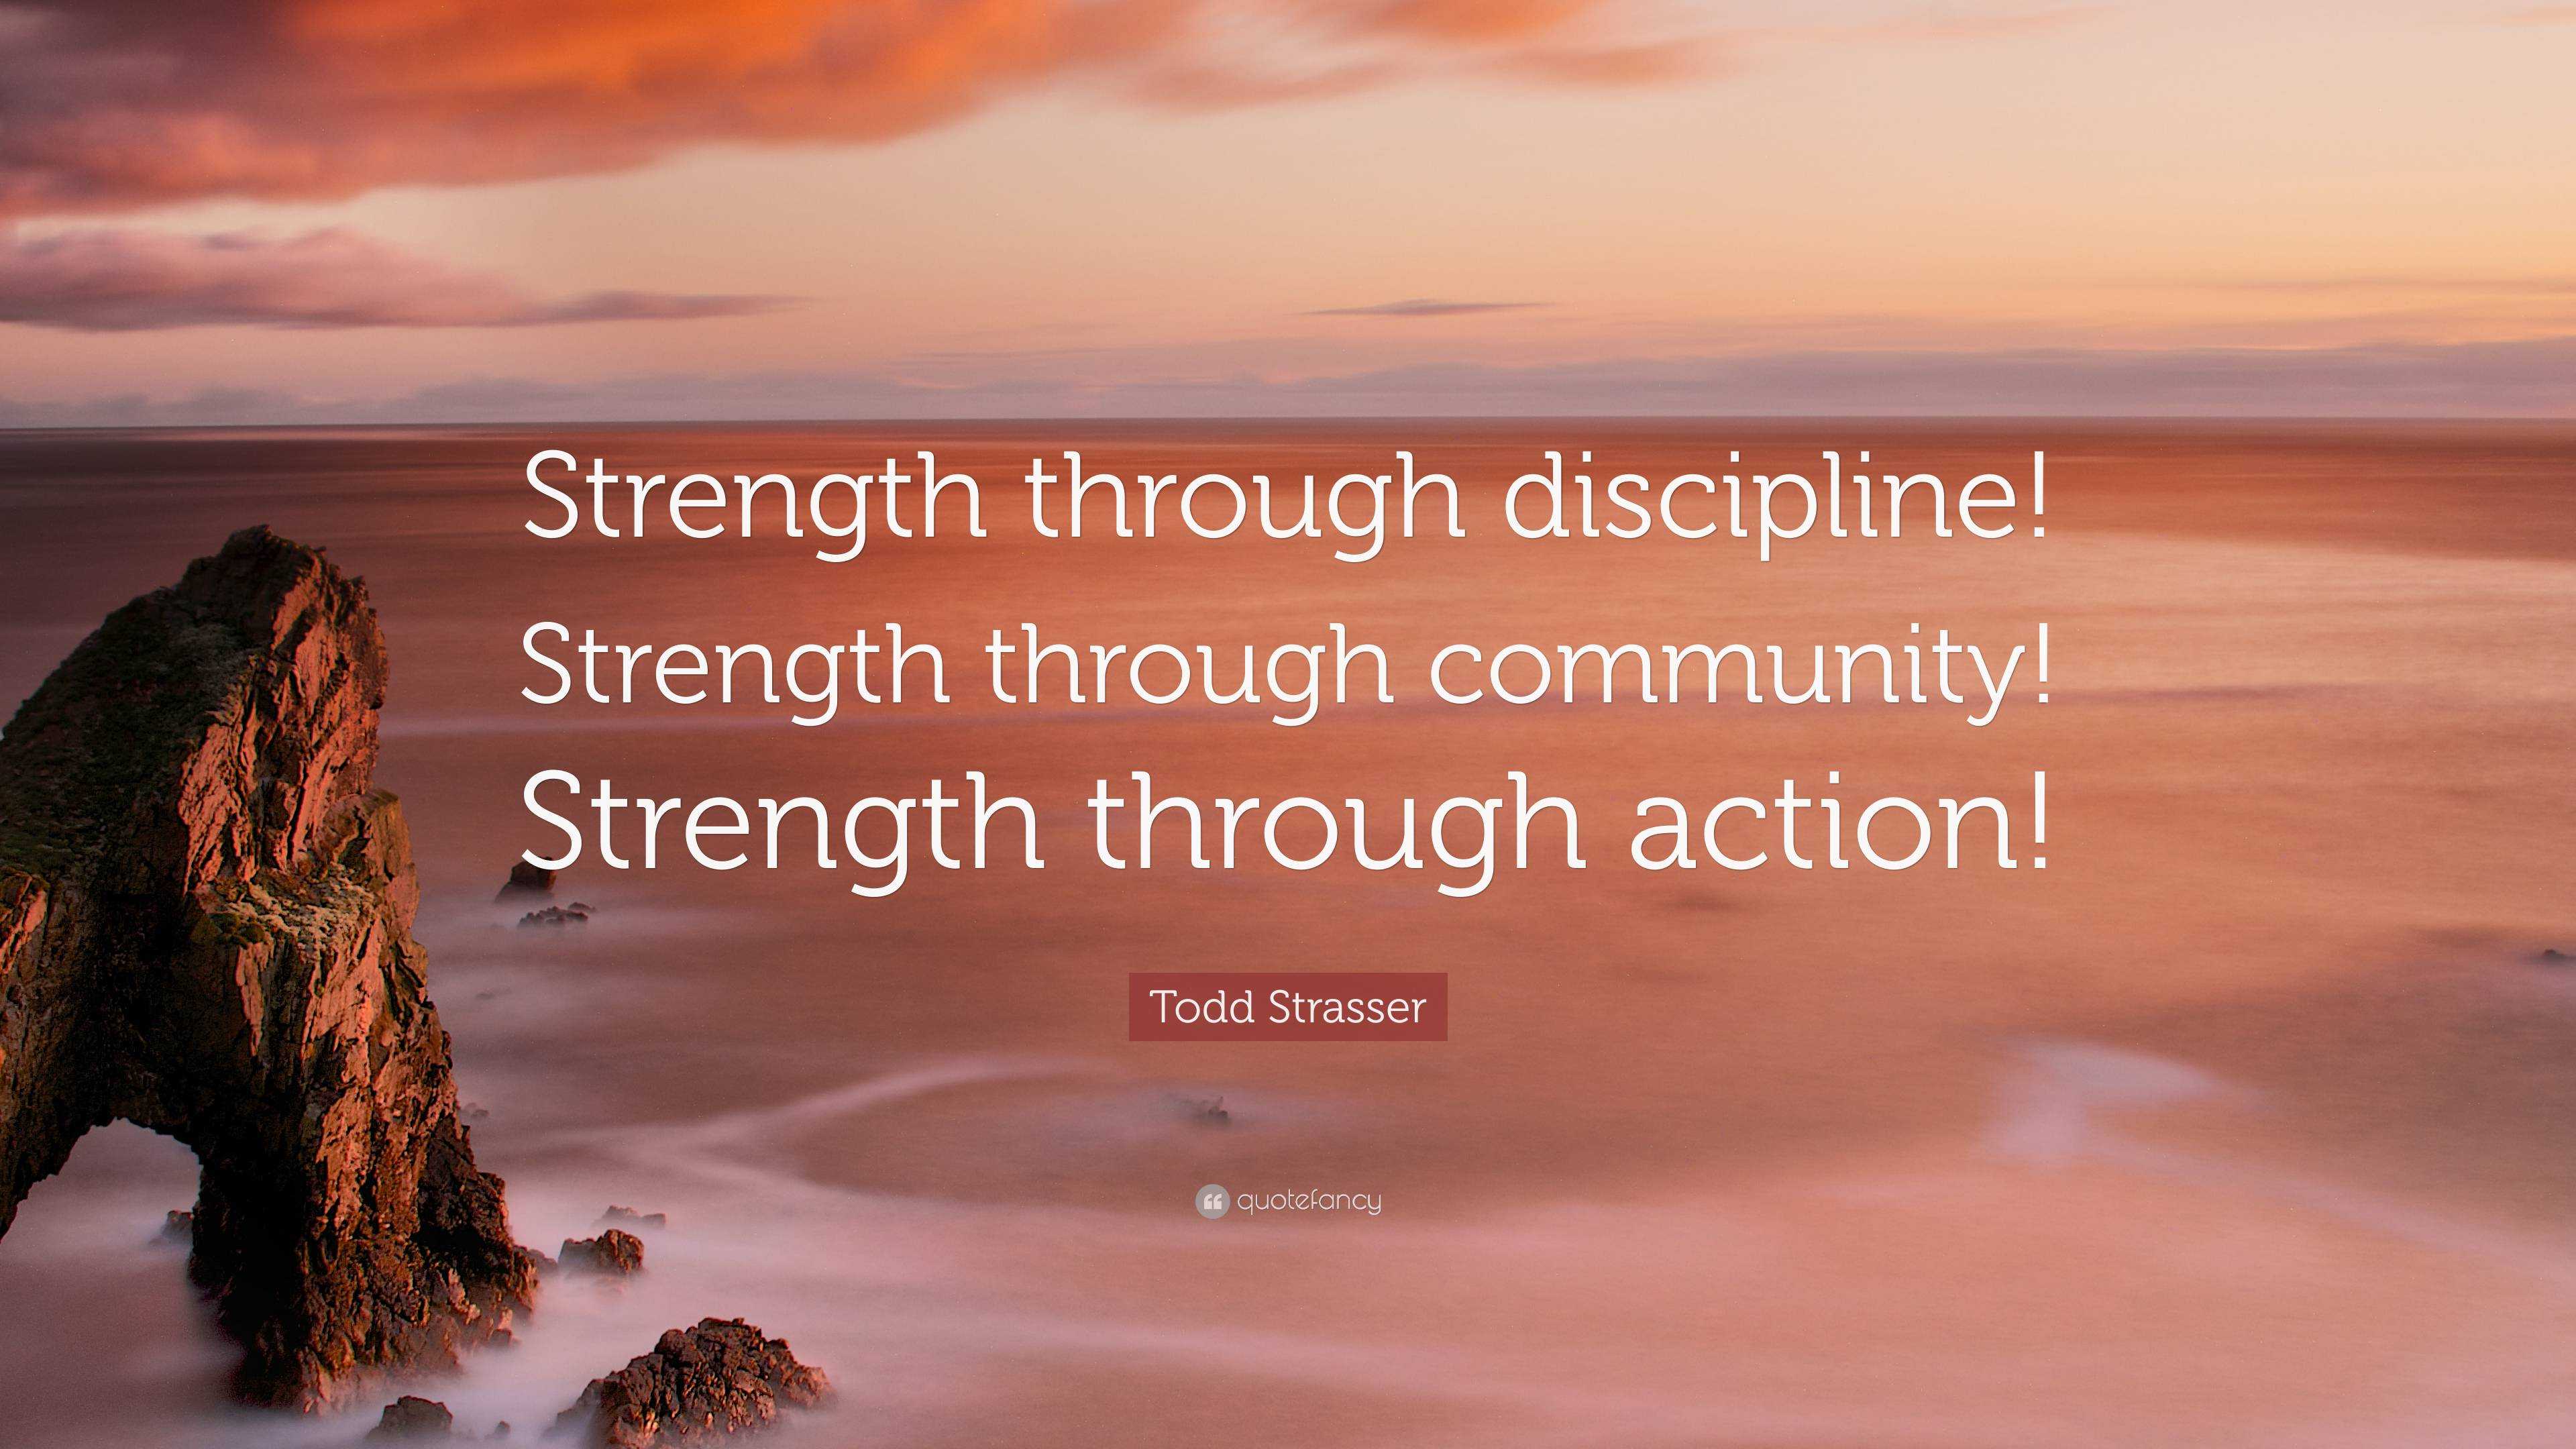 Todd Strasser Quote “Strength through discipline